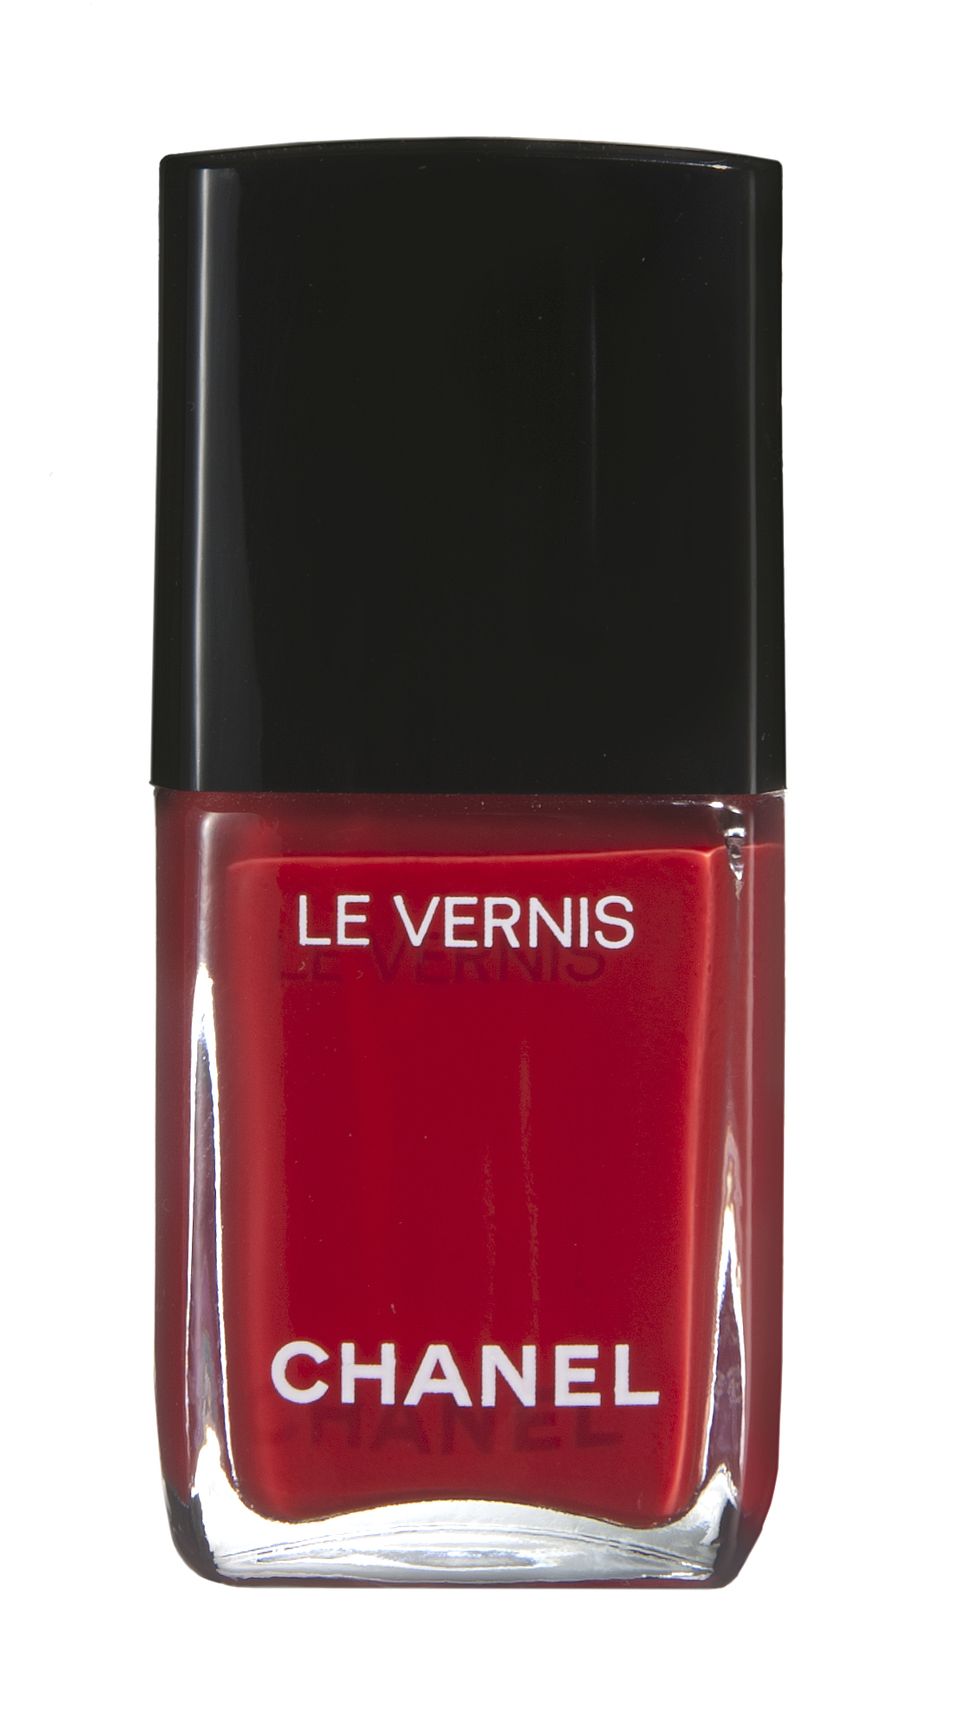 Très chic: Le Vernis n.546 di Chanel (25 euro).